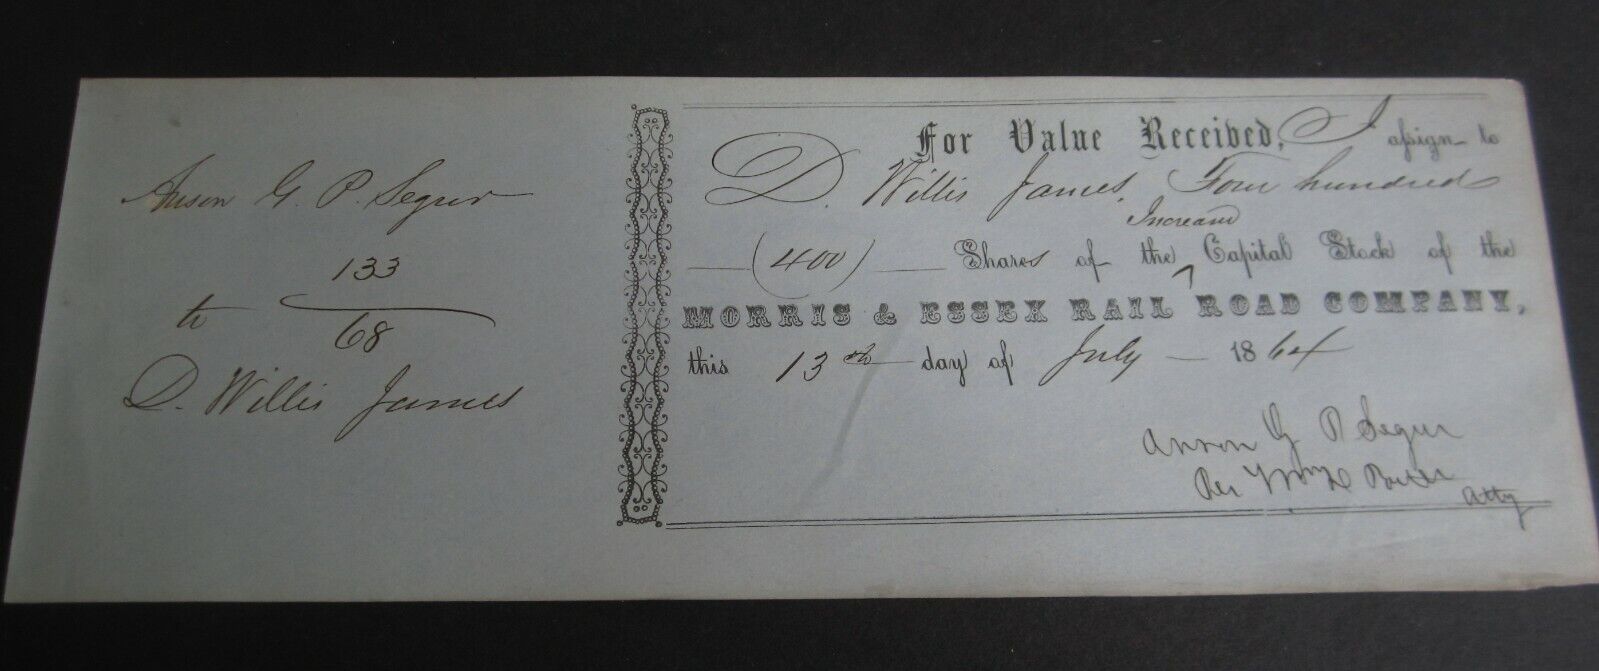 Old 1864 MORRIS & ESSEX RAILROAD - Stock Transfer Document - D. WILLIS JAMES